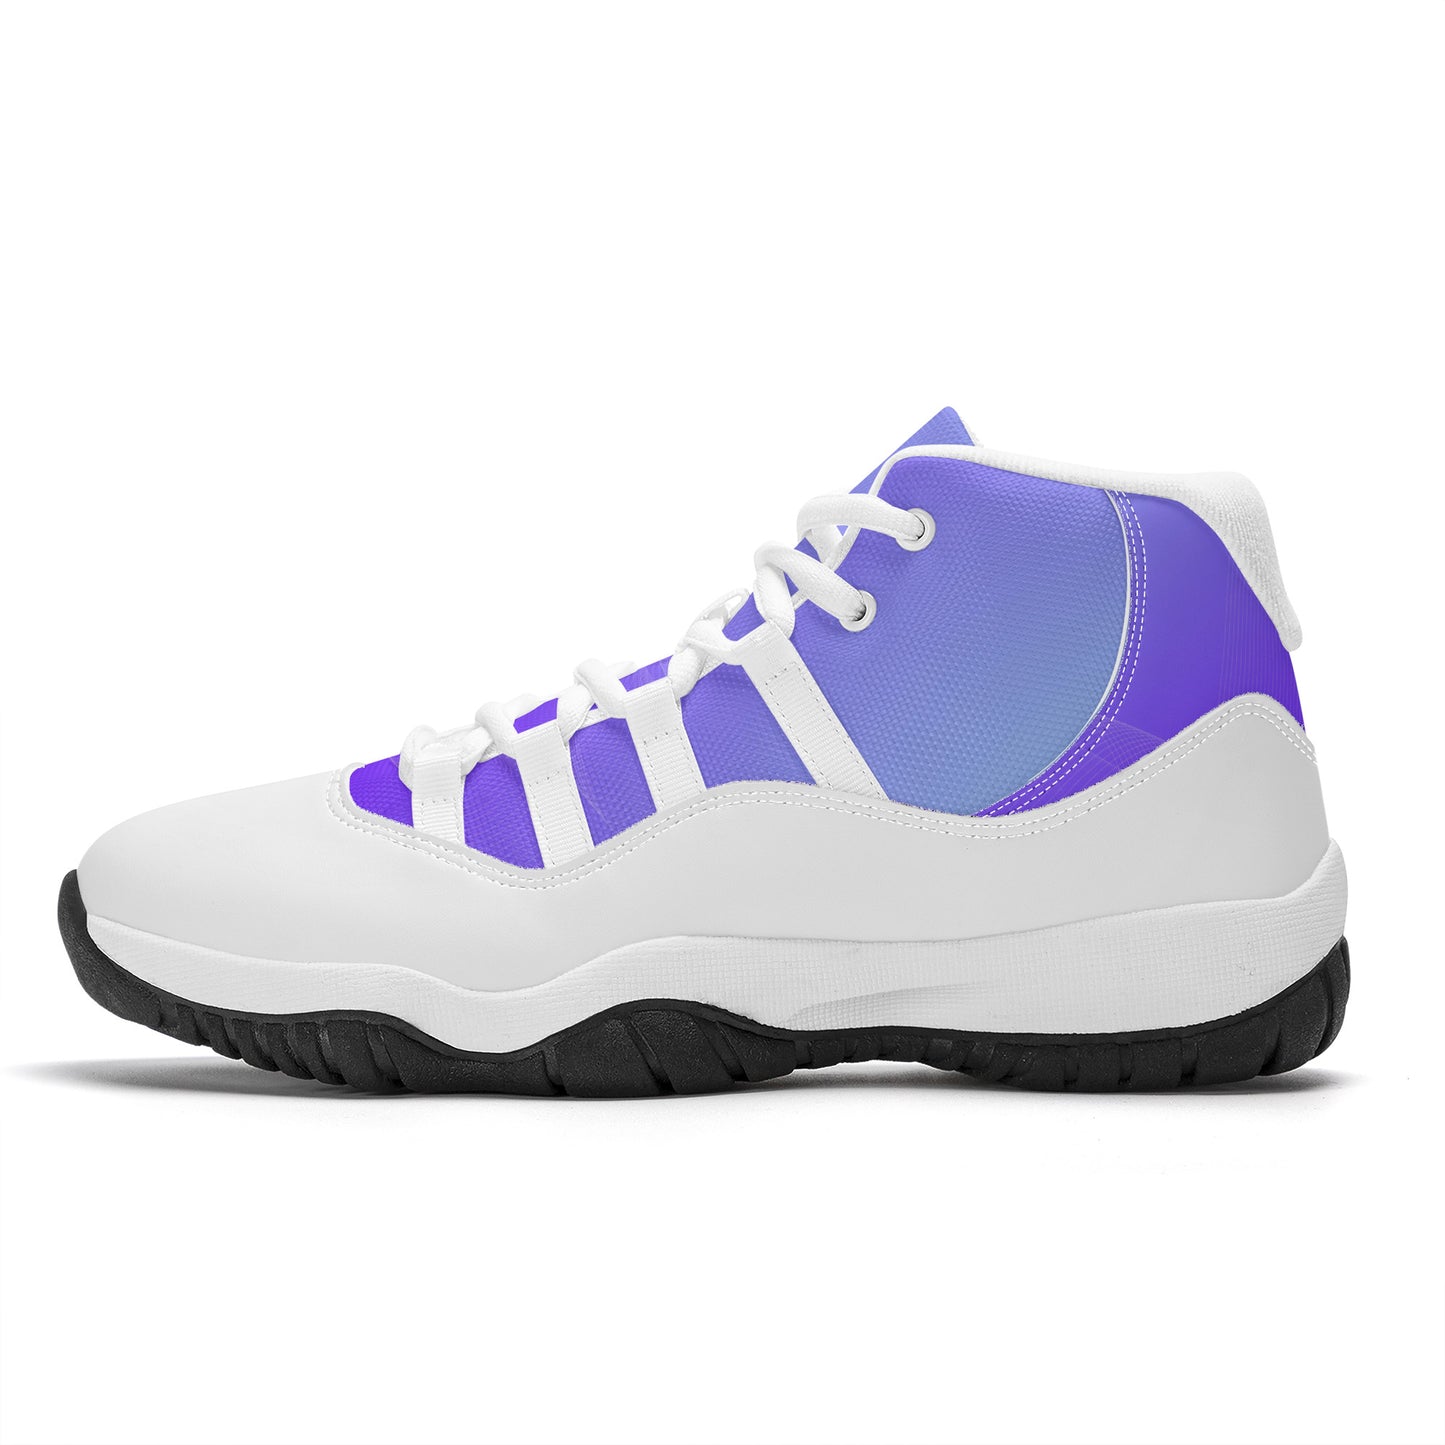 High Top Air Retro Sneakers - Purple